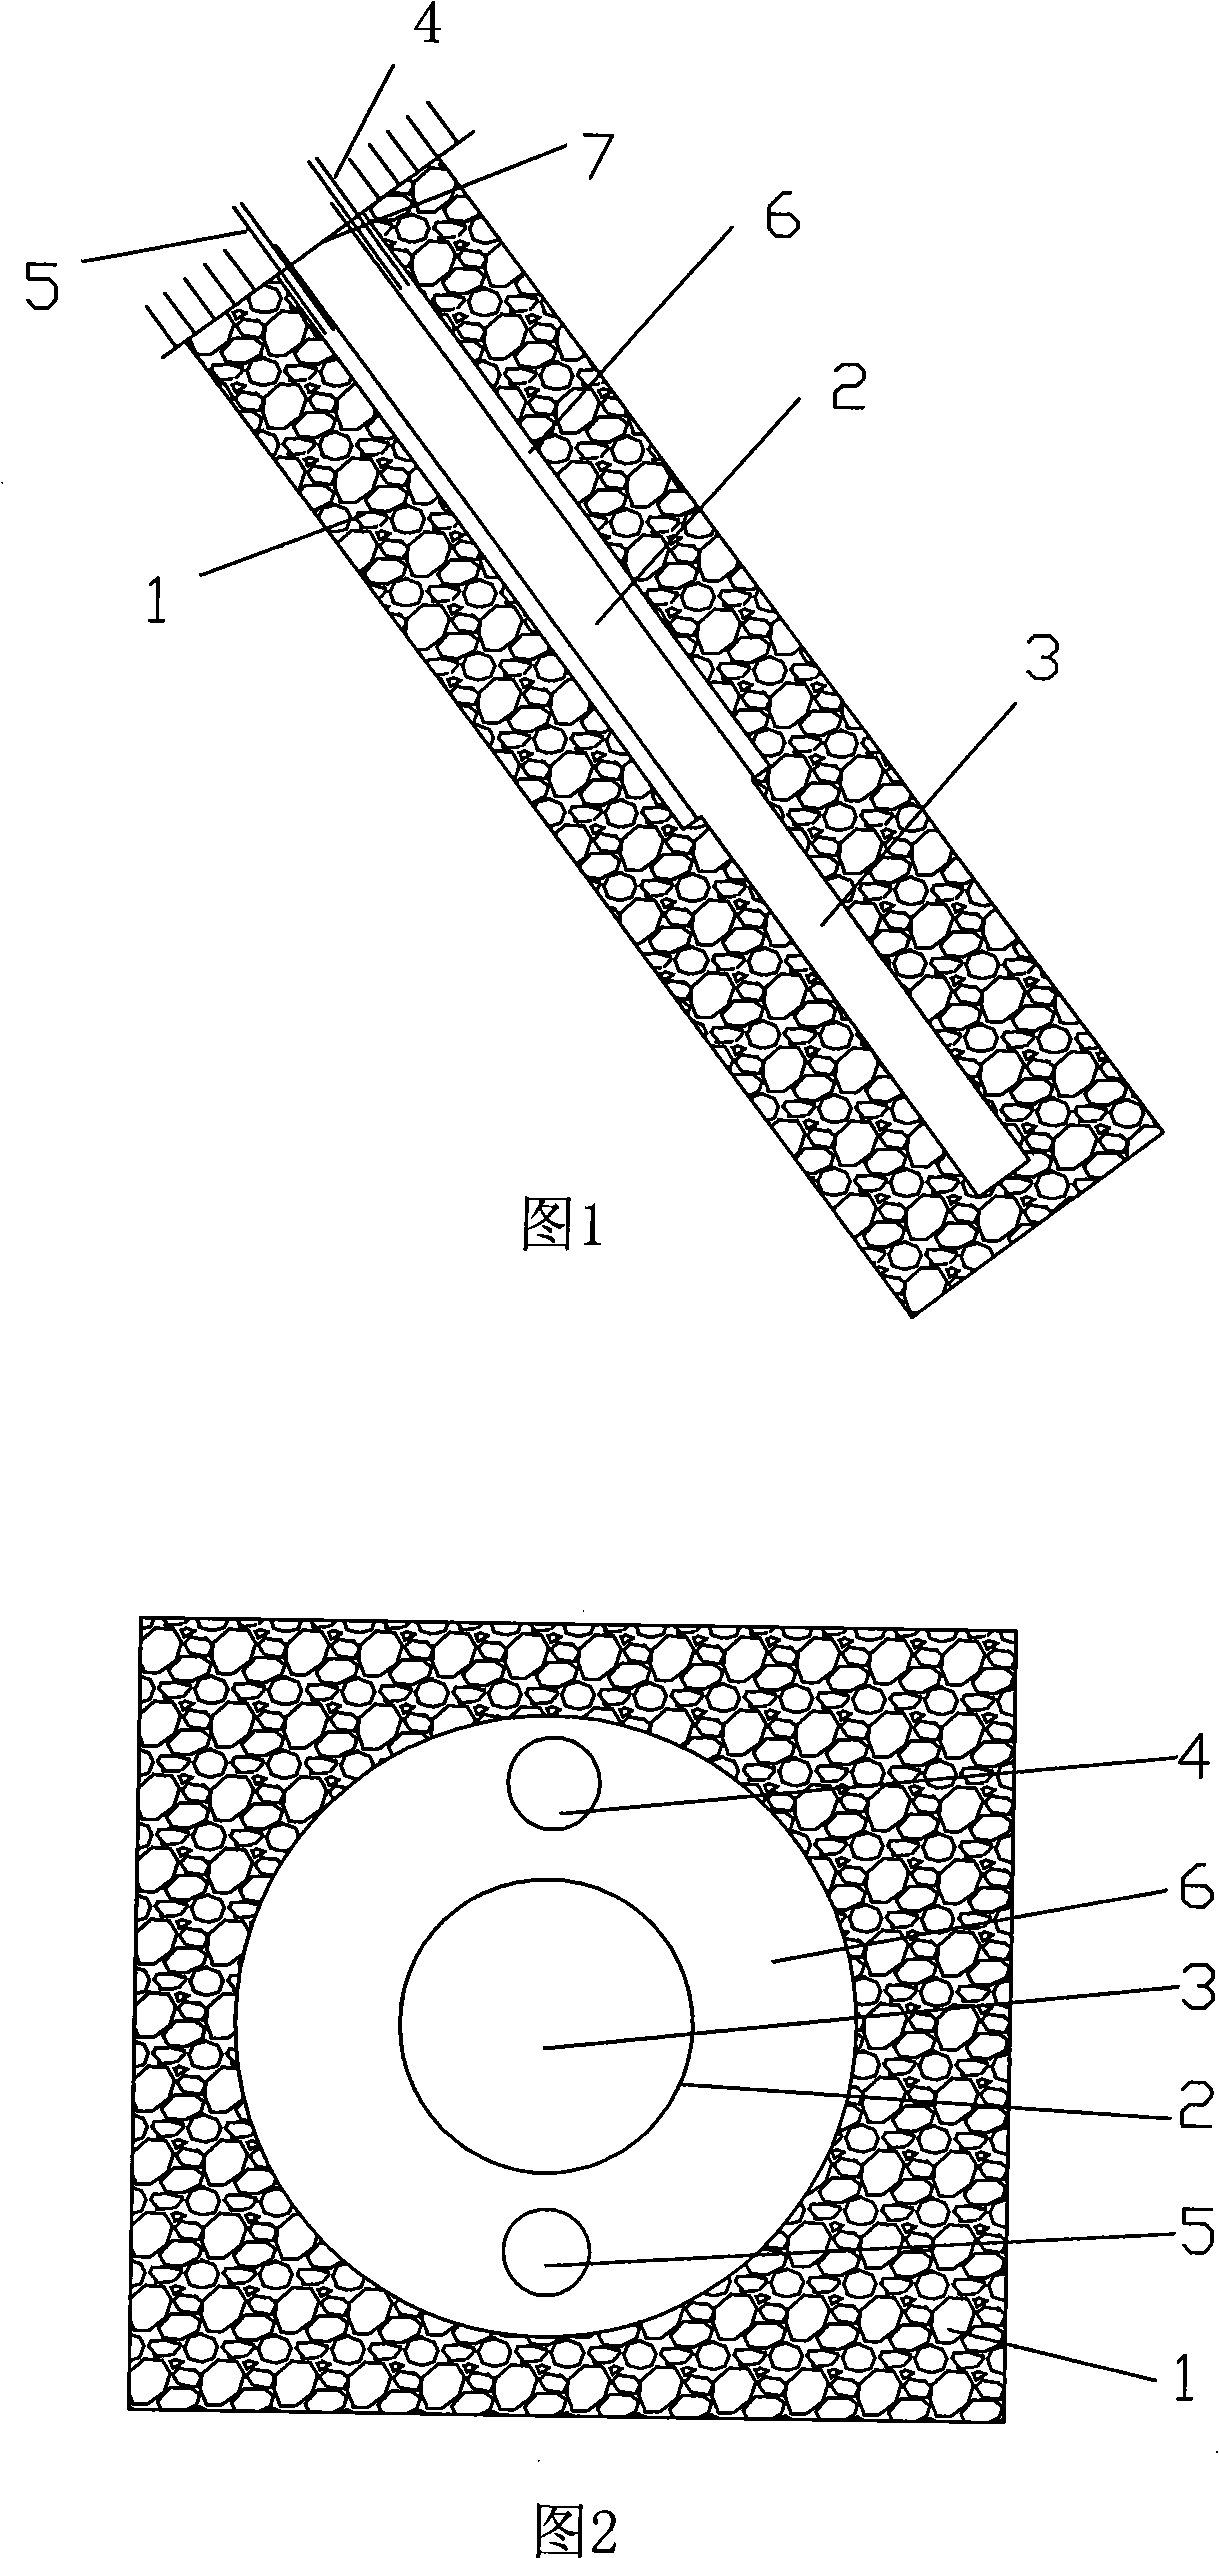 Heavy pressure slip-casting hole-sealing method for large-diameter extraction borehole